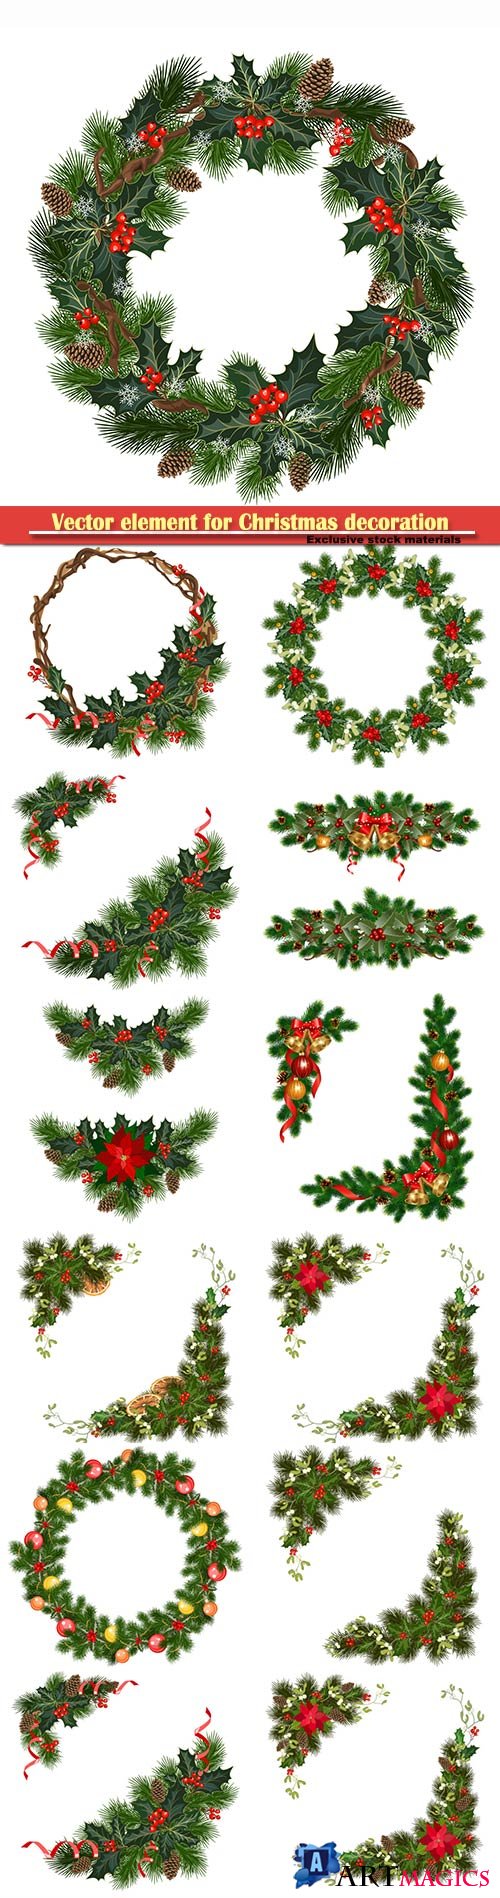 Design vector element for Christmas decoration